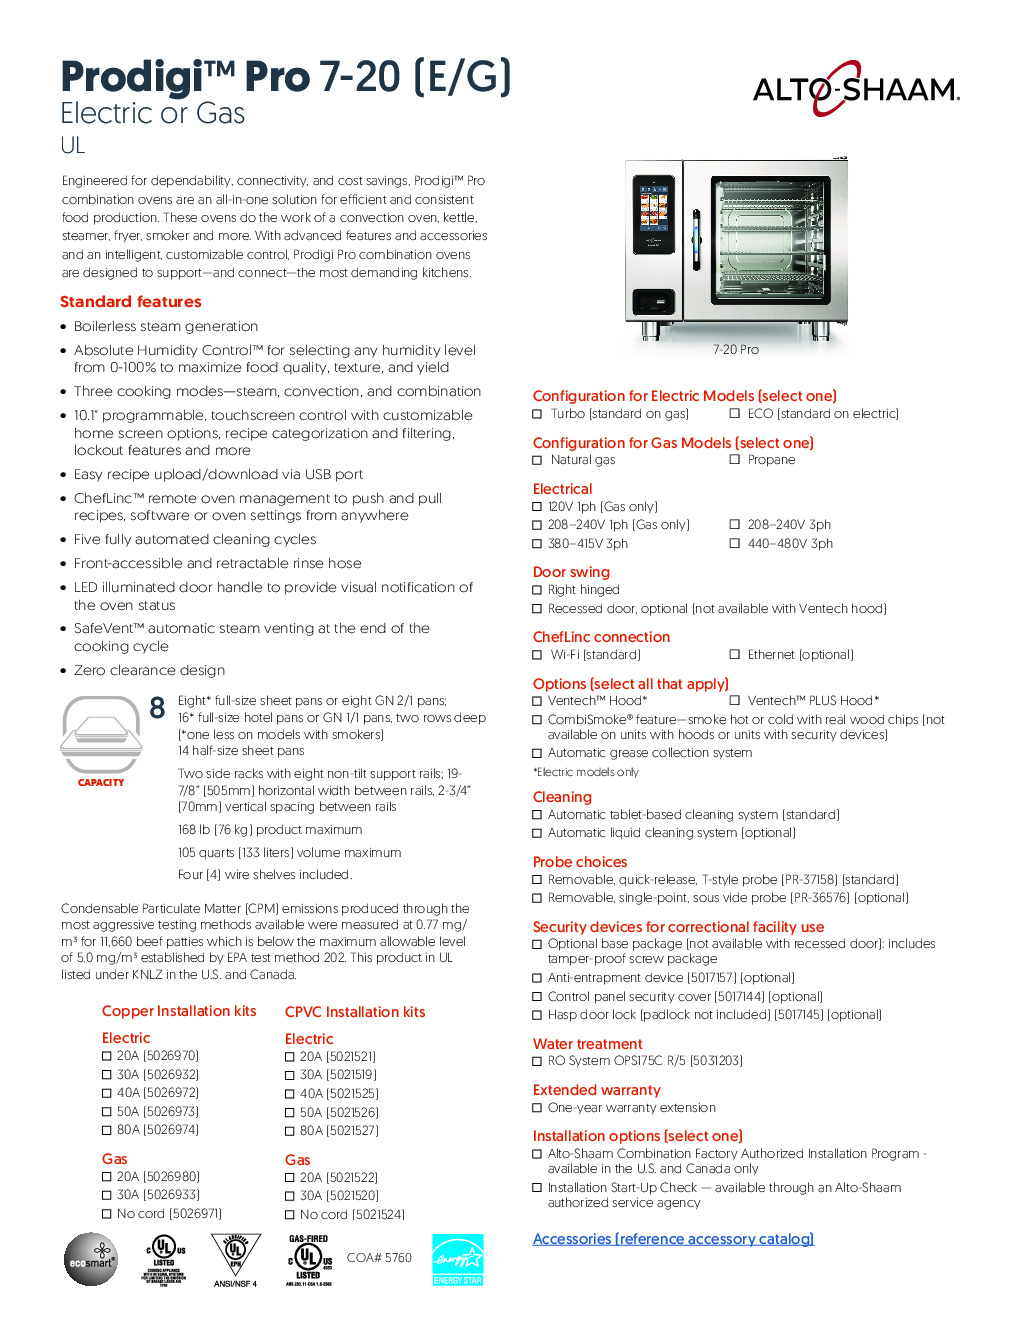 Alto-Shaam 7-20E PRO Electric Combi Oven